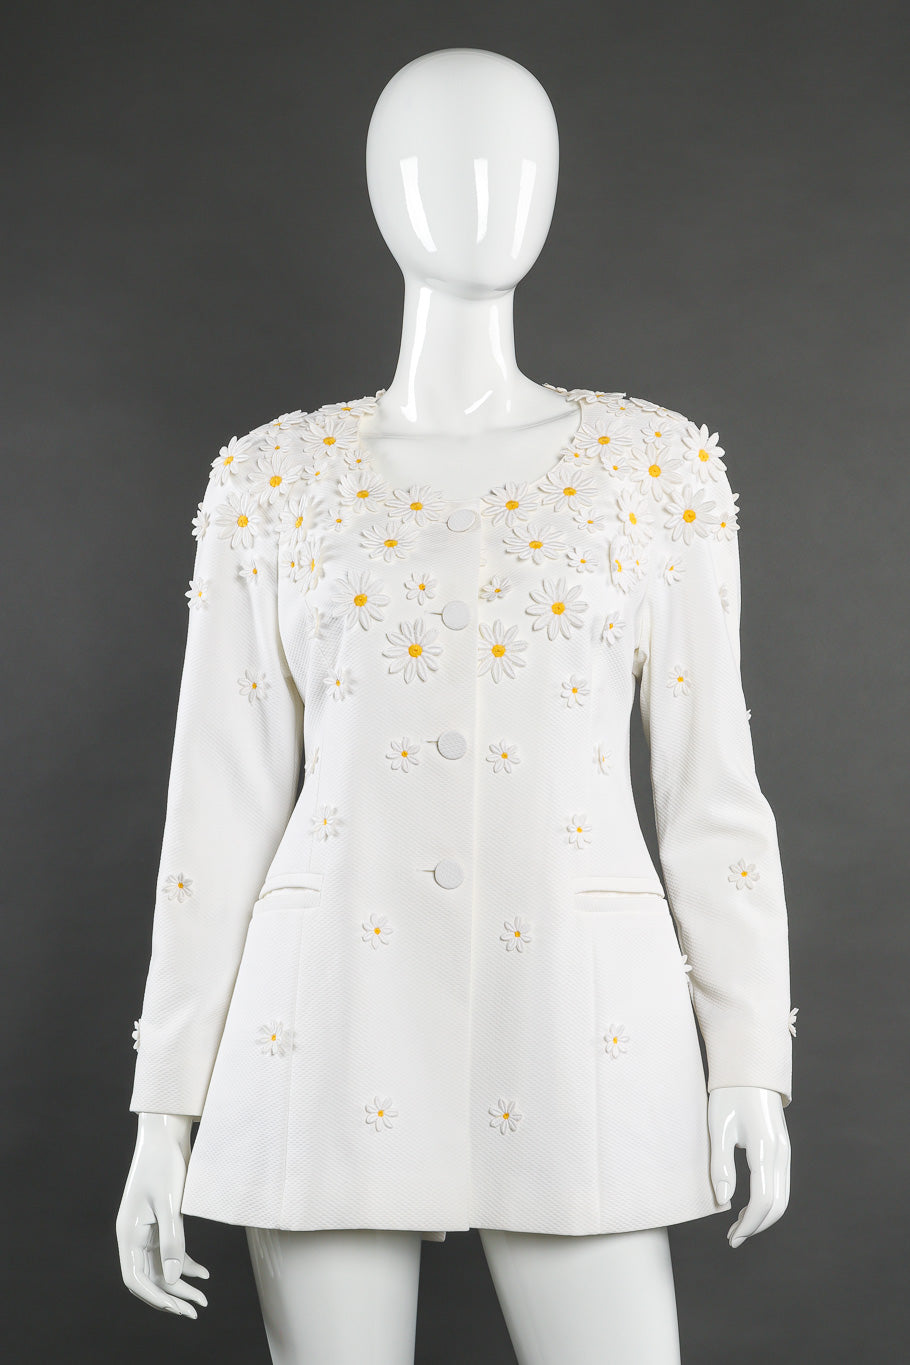 Daisy appliqué jacket by Lolita Lempicka on mannequin @recessla